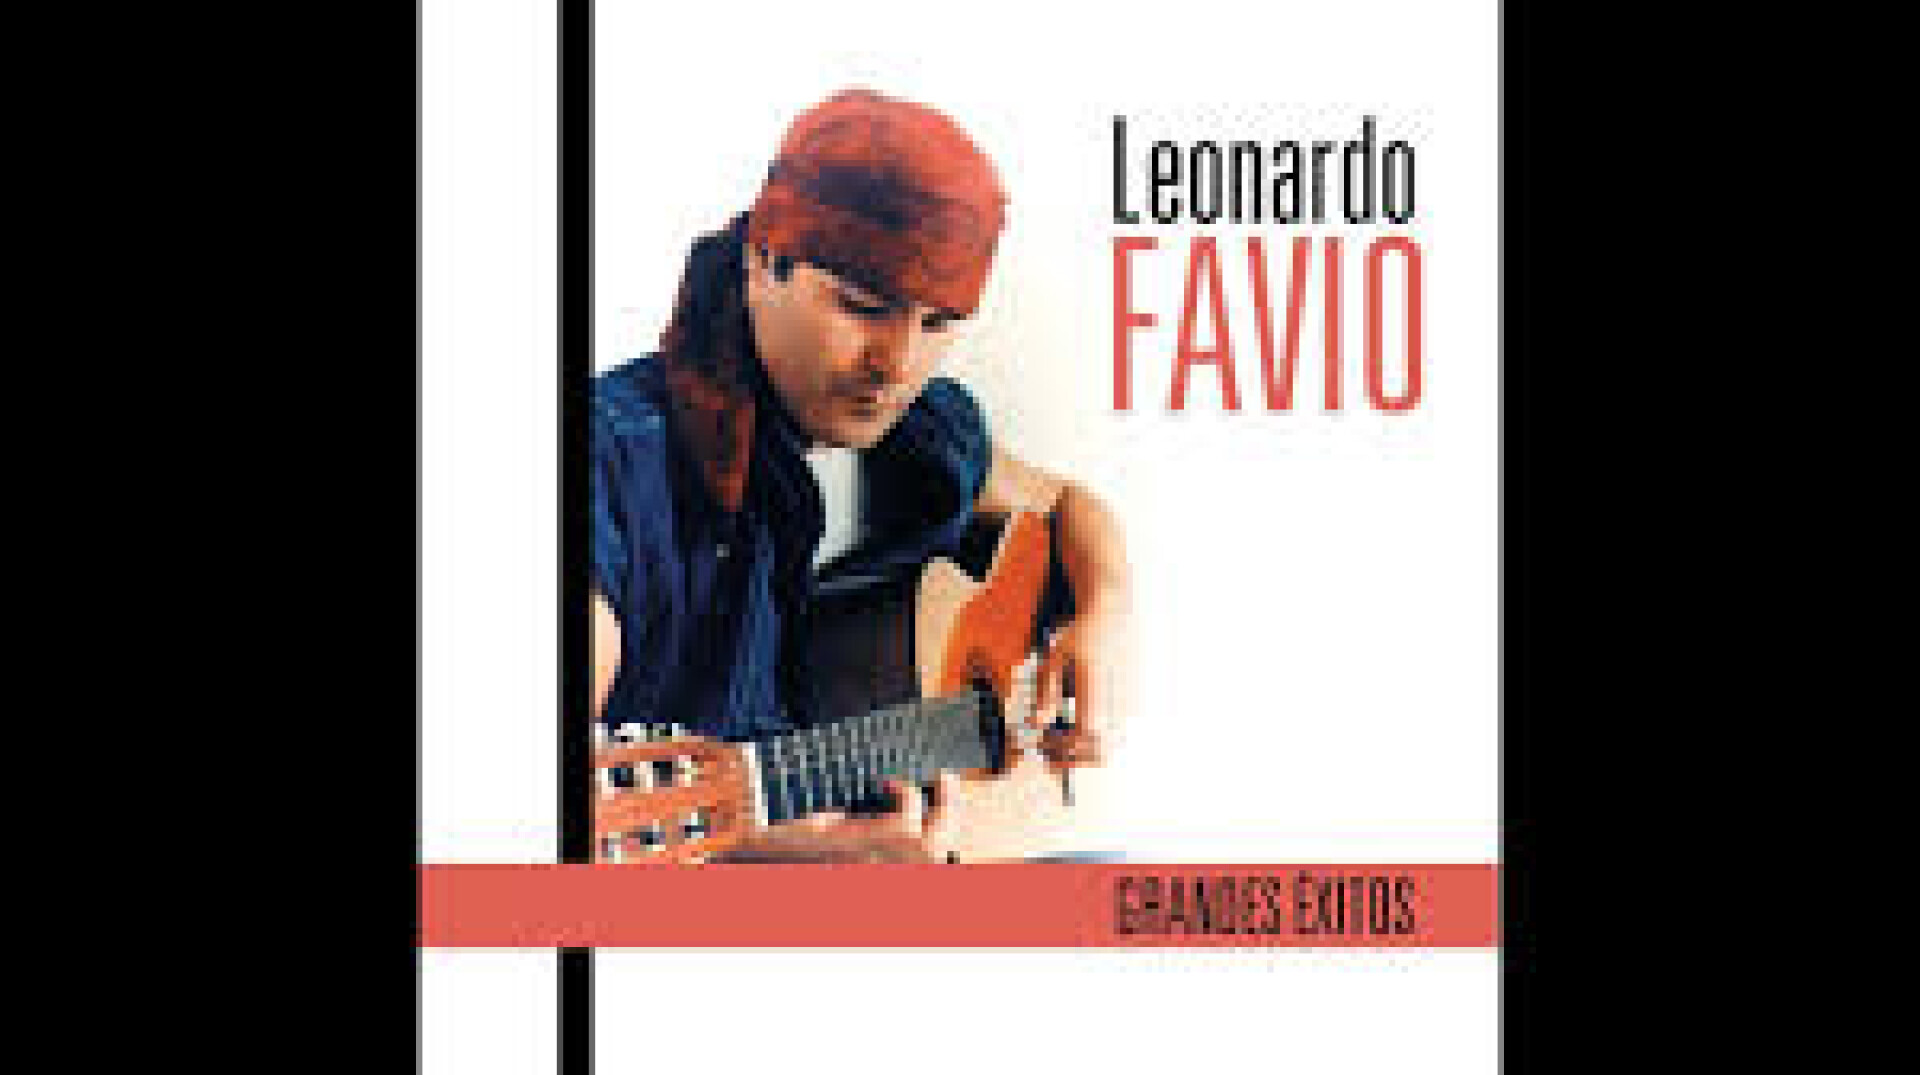 (c) Leonardo Favio-grandes Exitos 